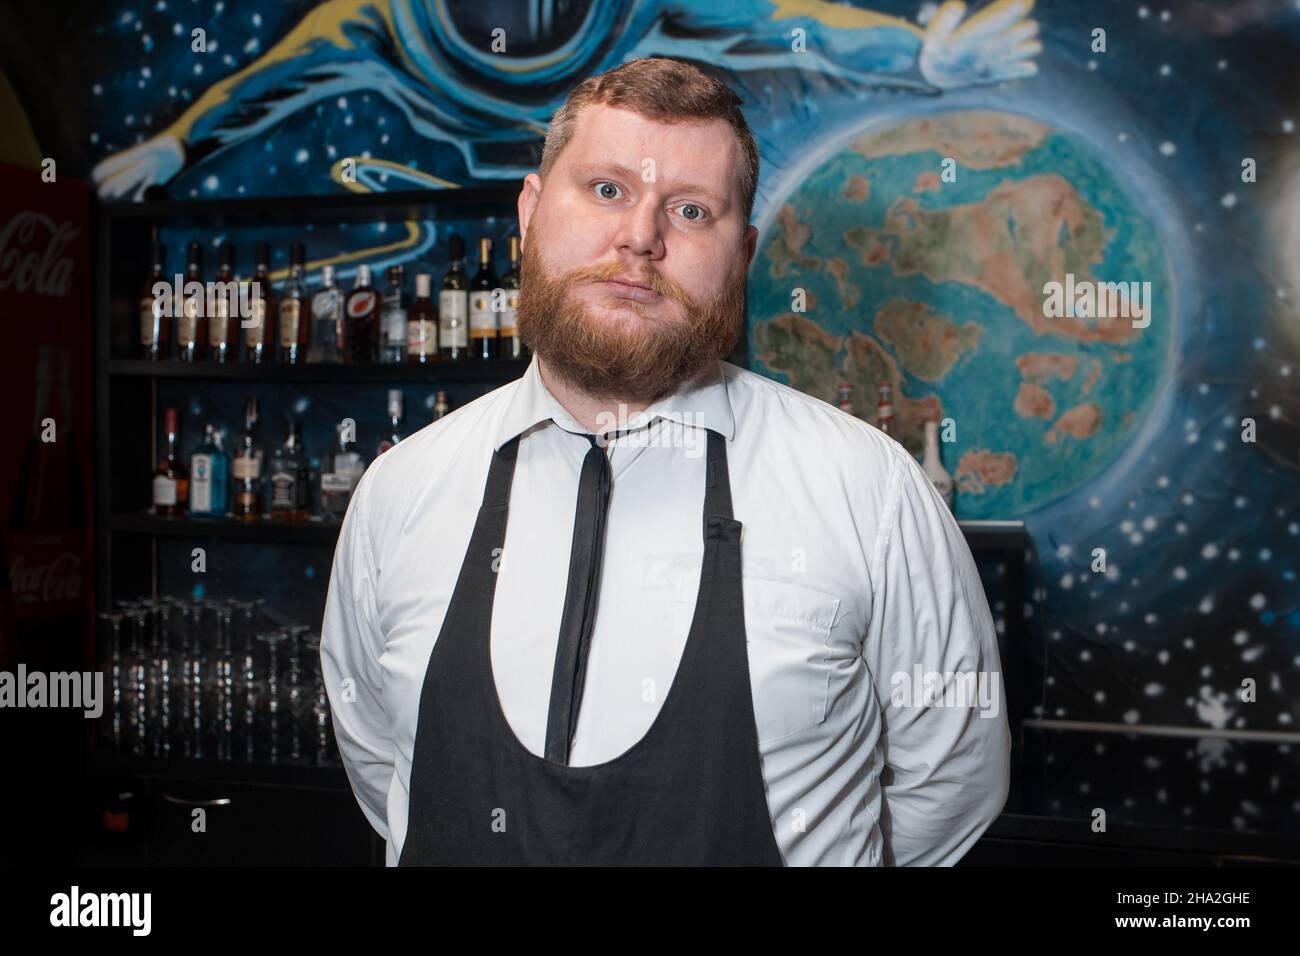 Bearded Adult Caucasian Looking Professional Bartender Portrait in Nightclub. Stock Photo